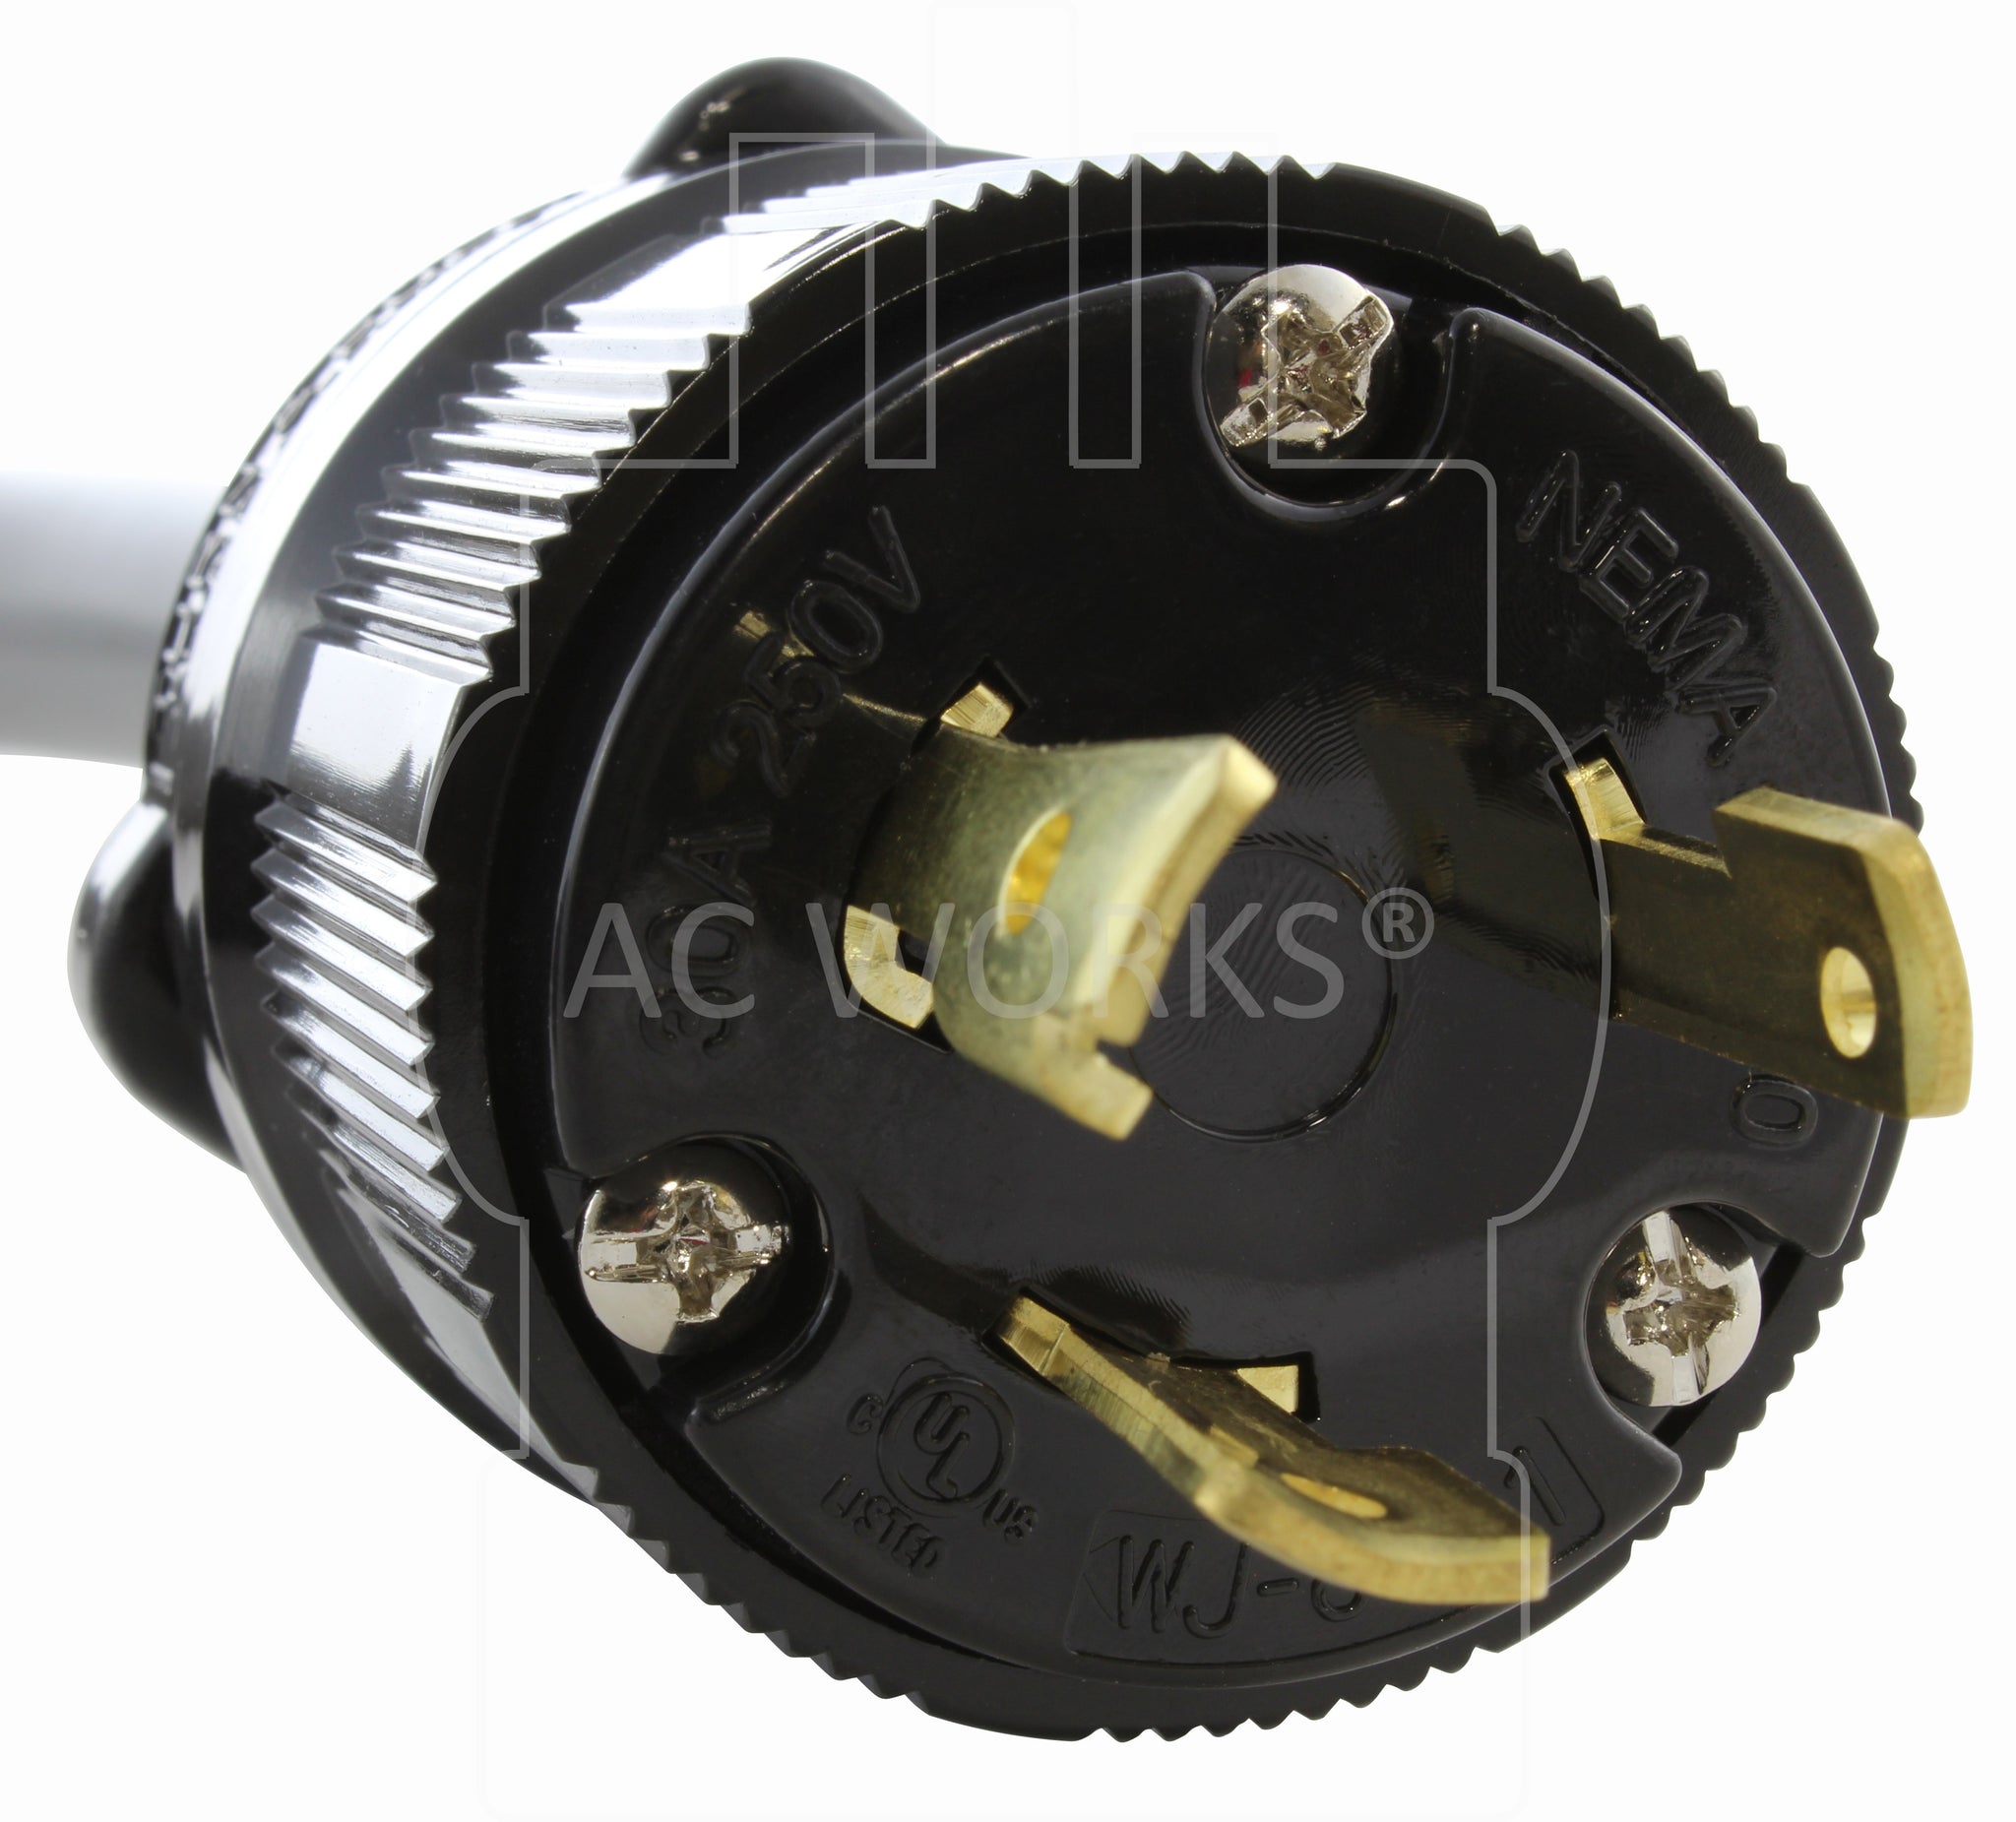 AC WORKS® EV Adapter 30A 250V L6-30P Locking Plug to To 50A Tesla